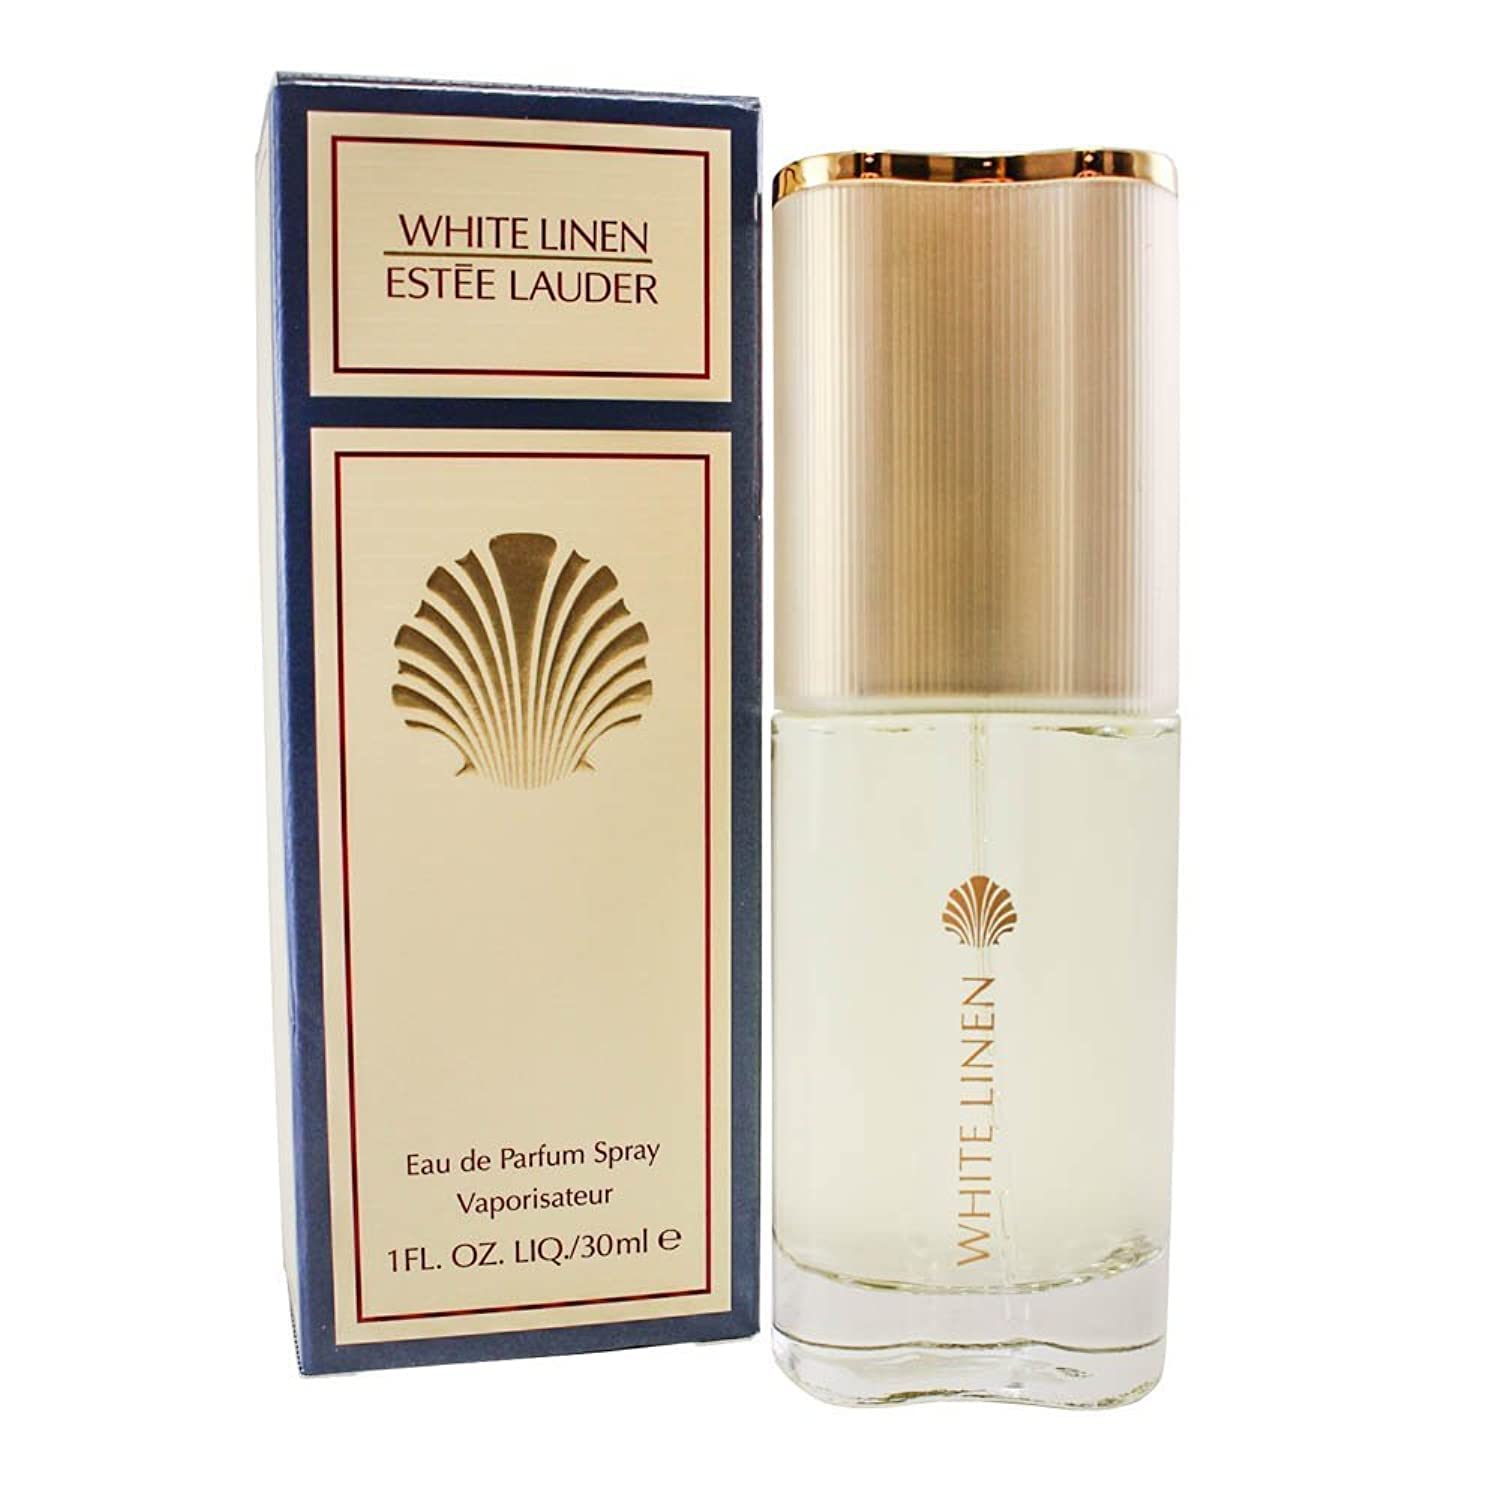 Estee Lauder White Linen EDP | My Perfume Shop Australia